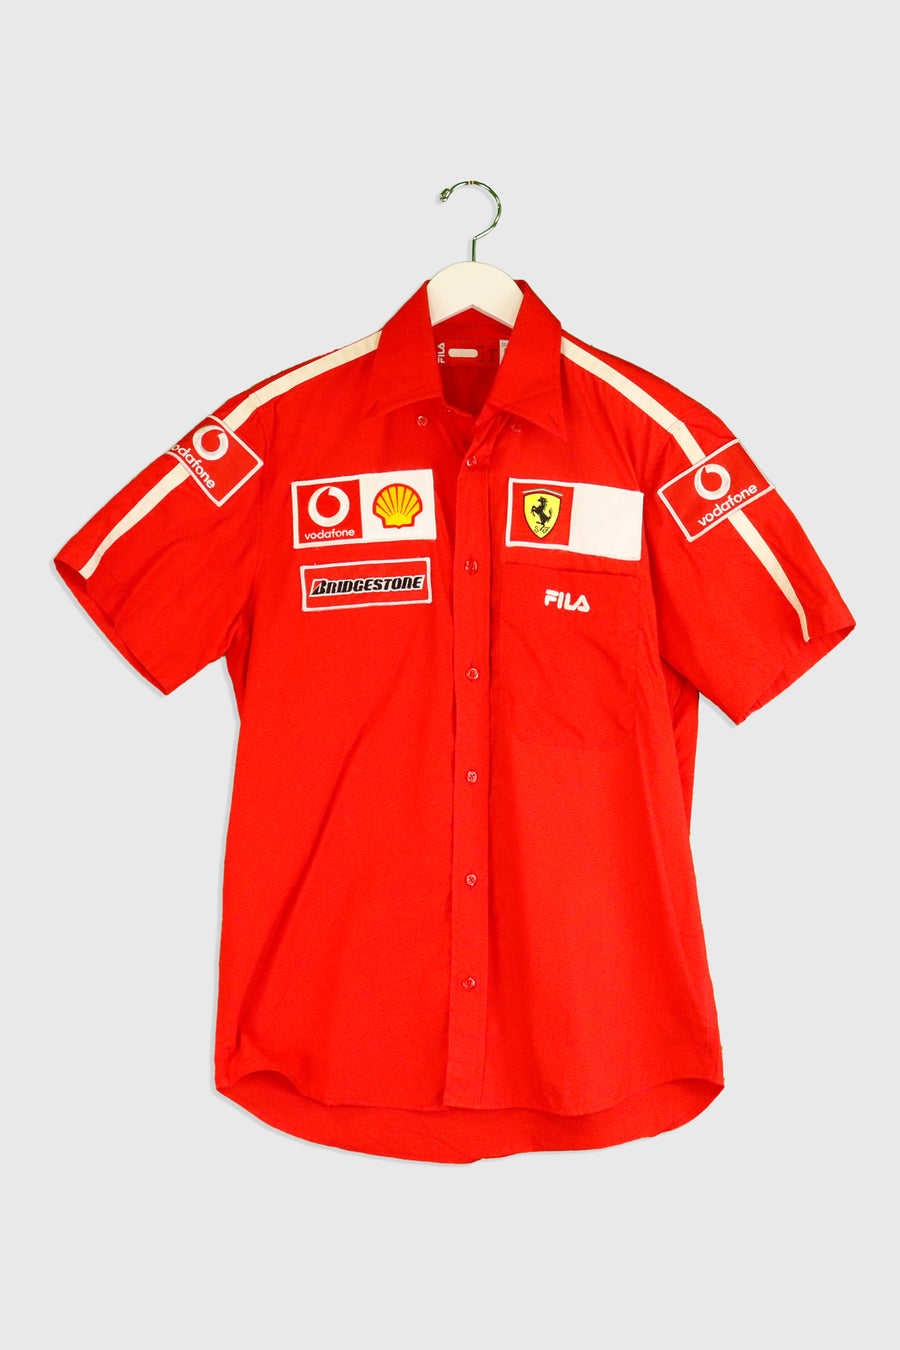 Vintage Ferrari Fila Sponsorship Button Up Collared T Shirt Sz S